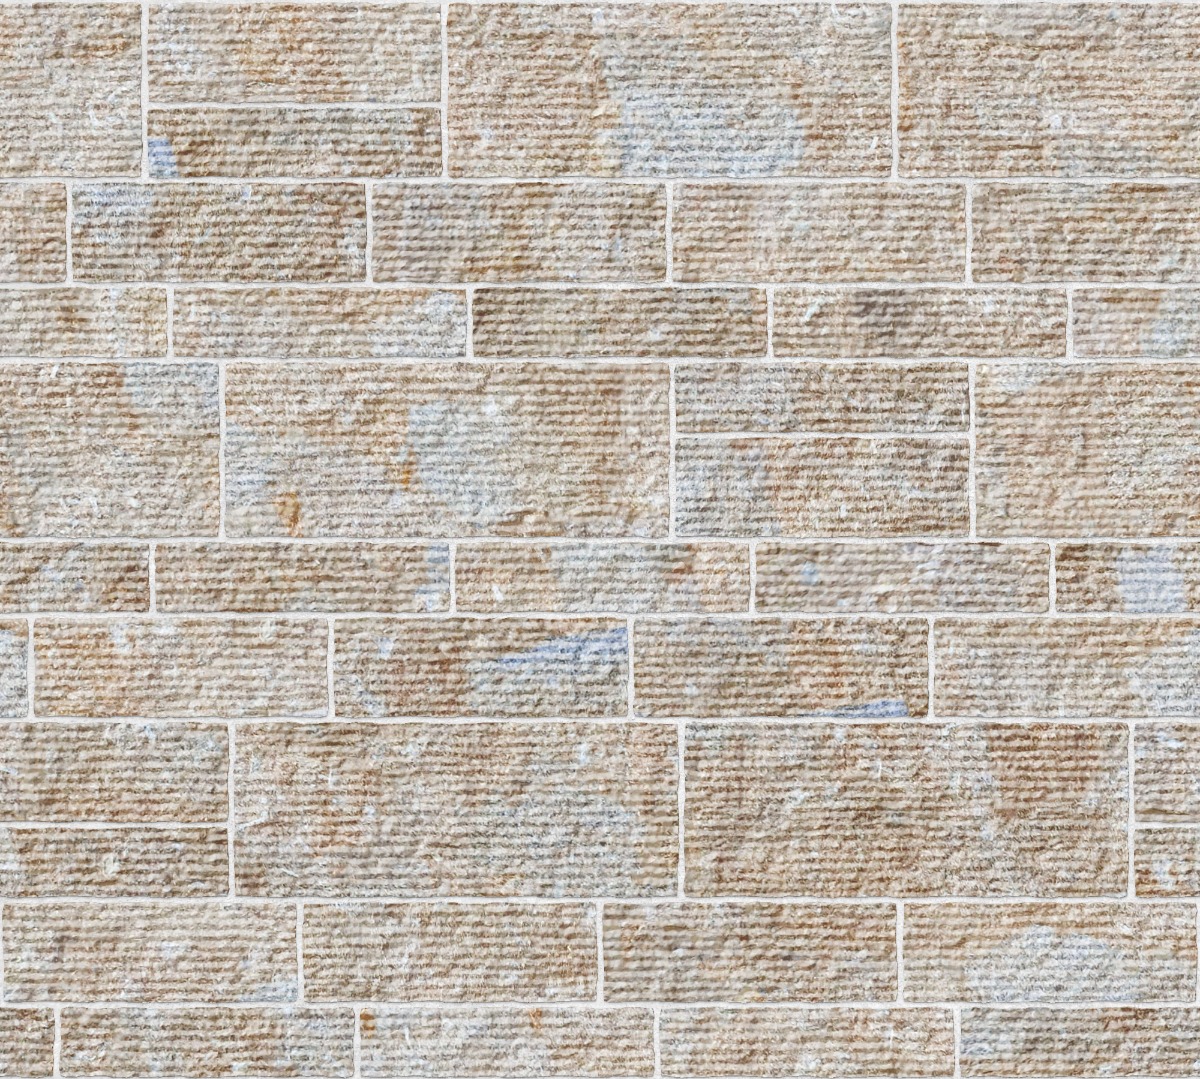 A seamless stone texture with rough limestone blocks arranged in a Broken Range Ashlar pattern